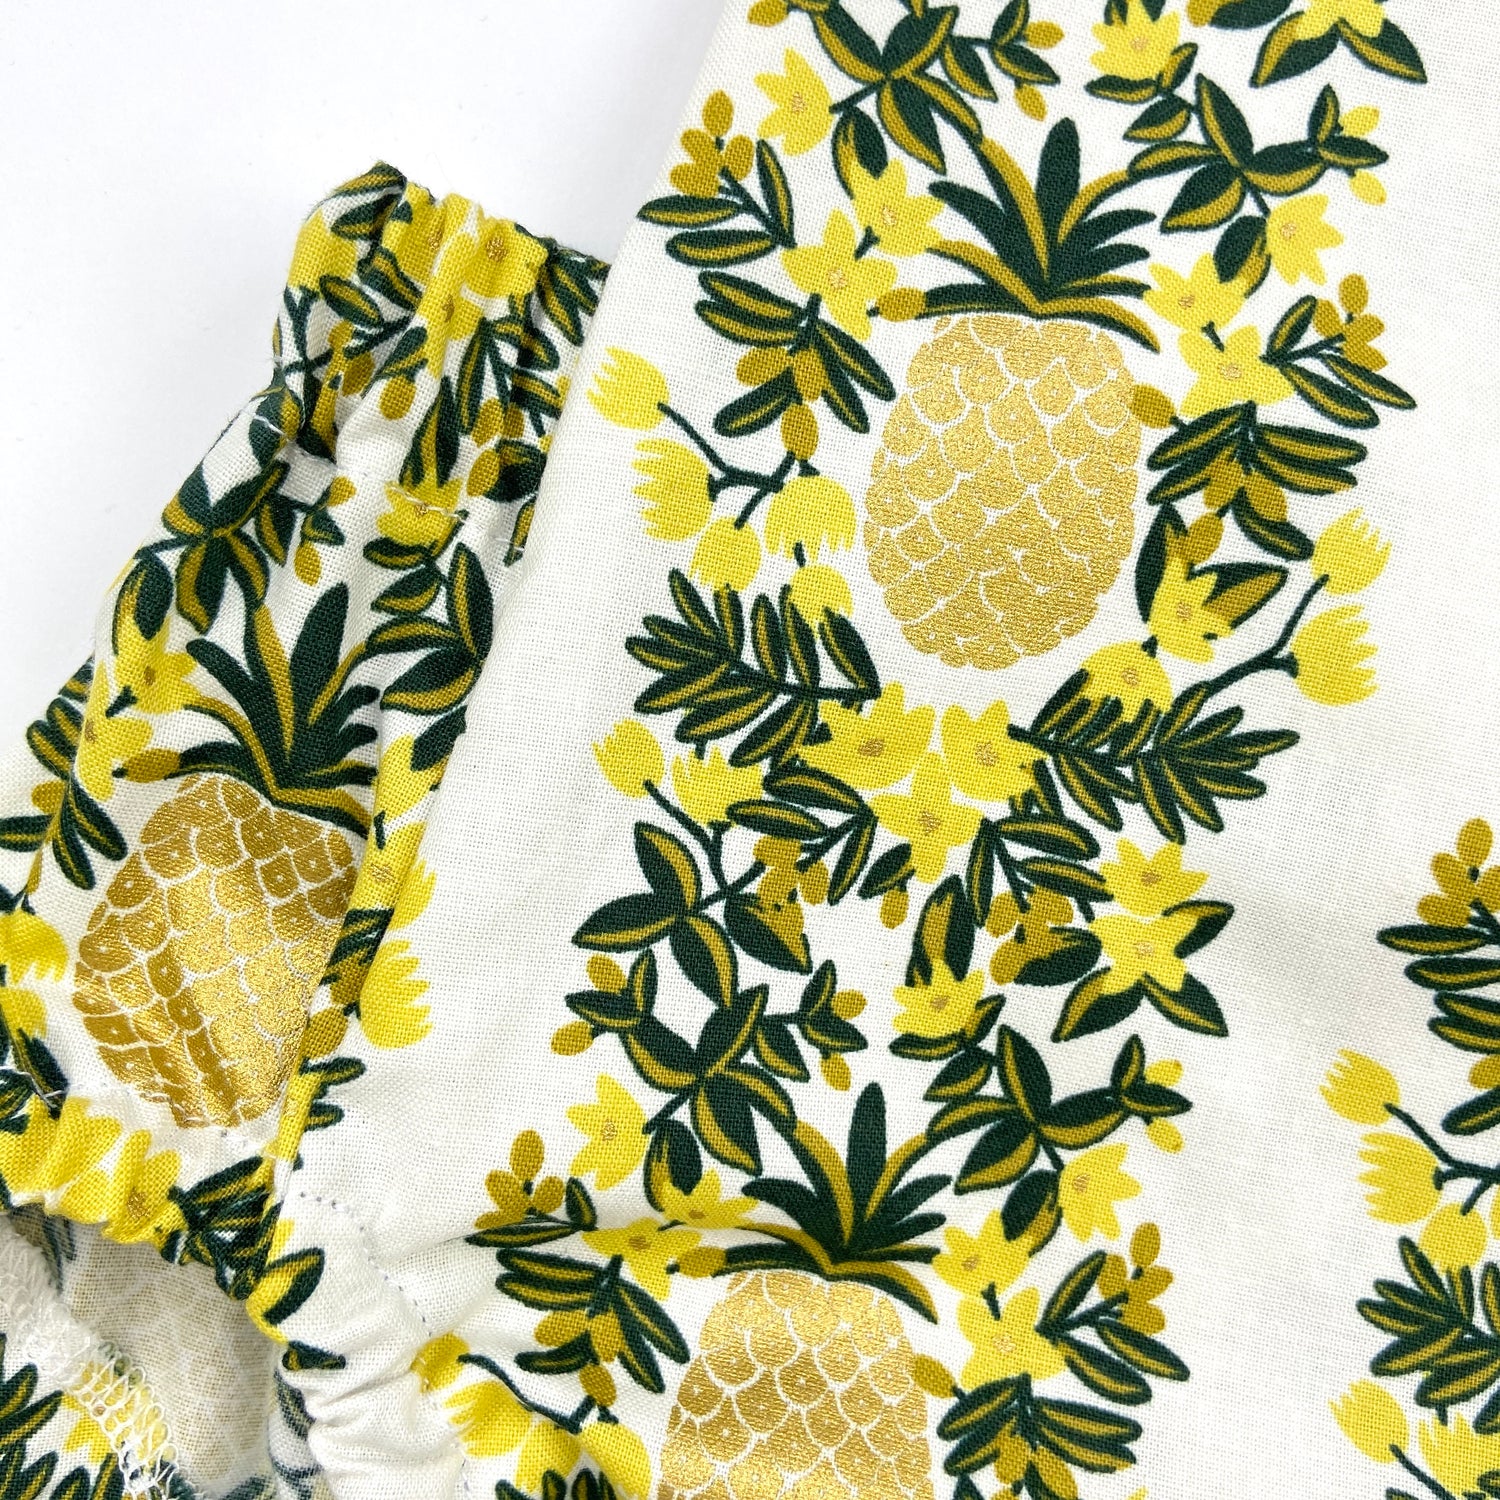 SALE 20% OFF Pineapple Vines Short Romper - Emma Neale Handmade